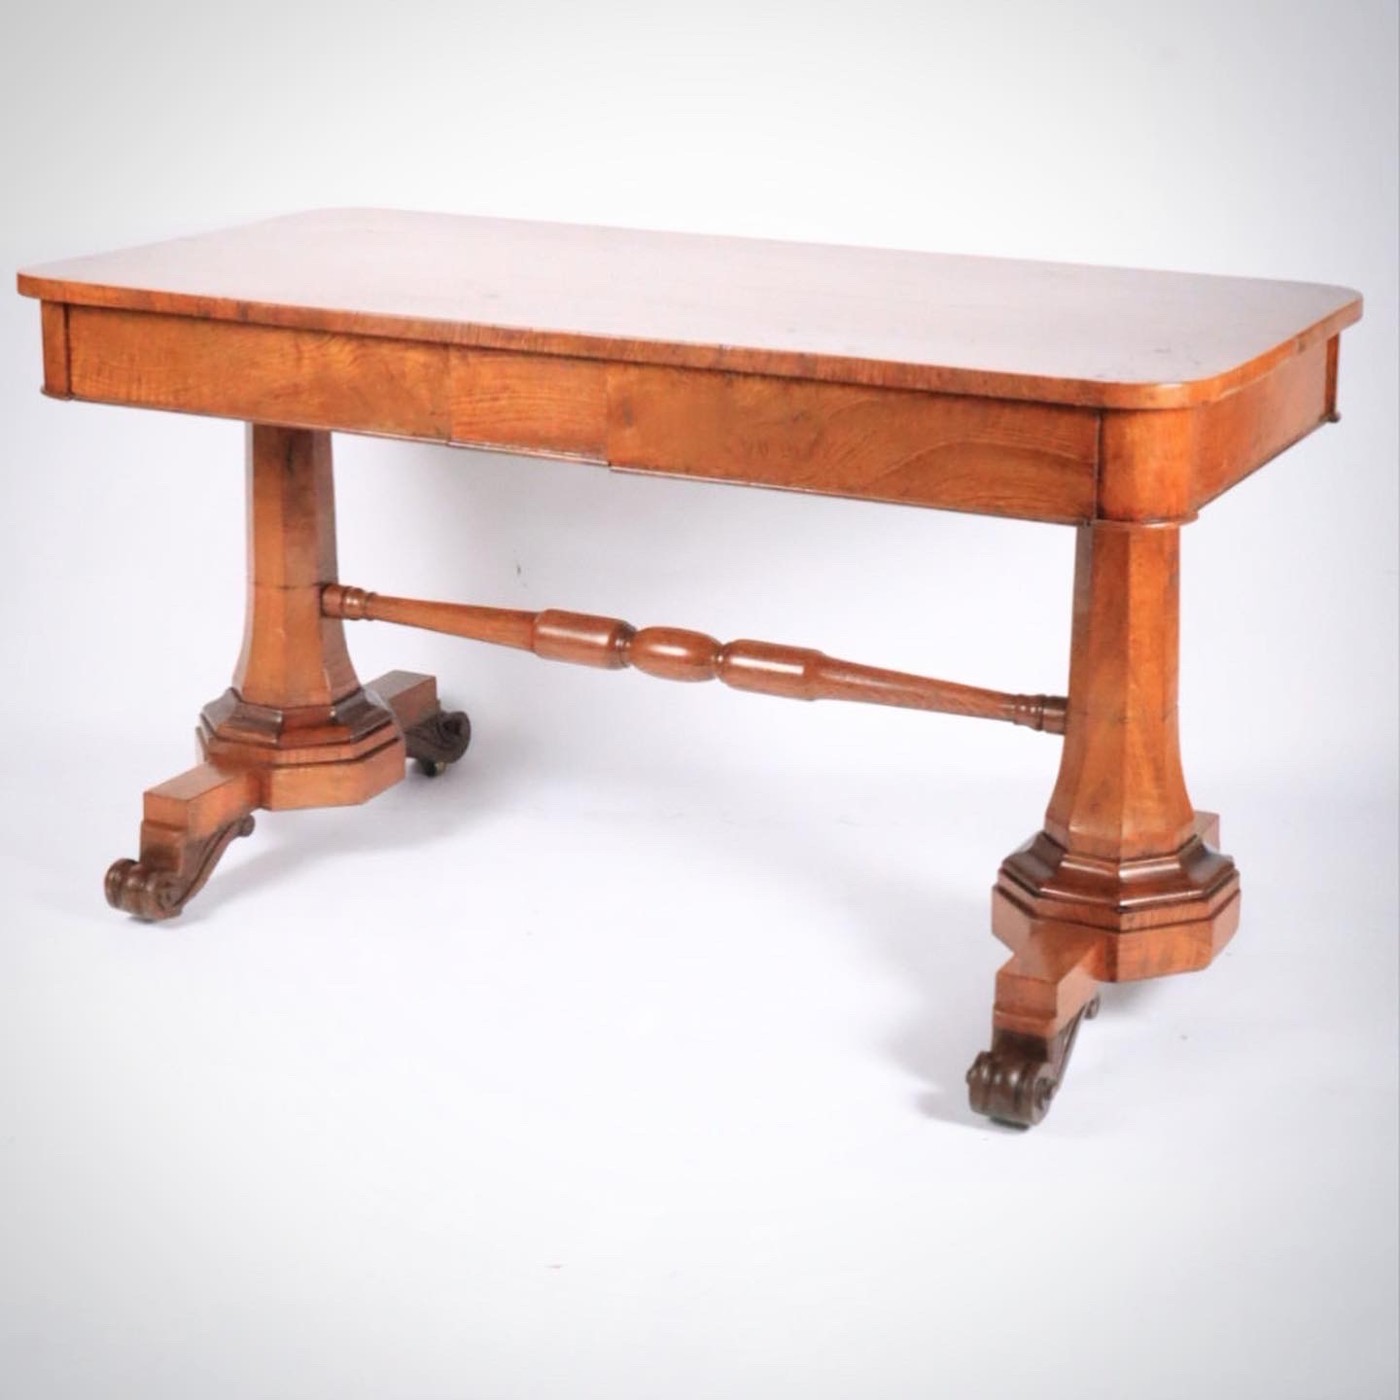 Bureau table in pollard oak , Engeland circa 1850